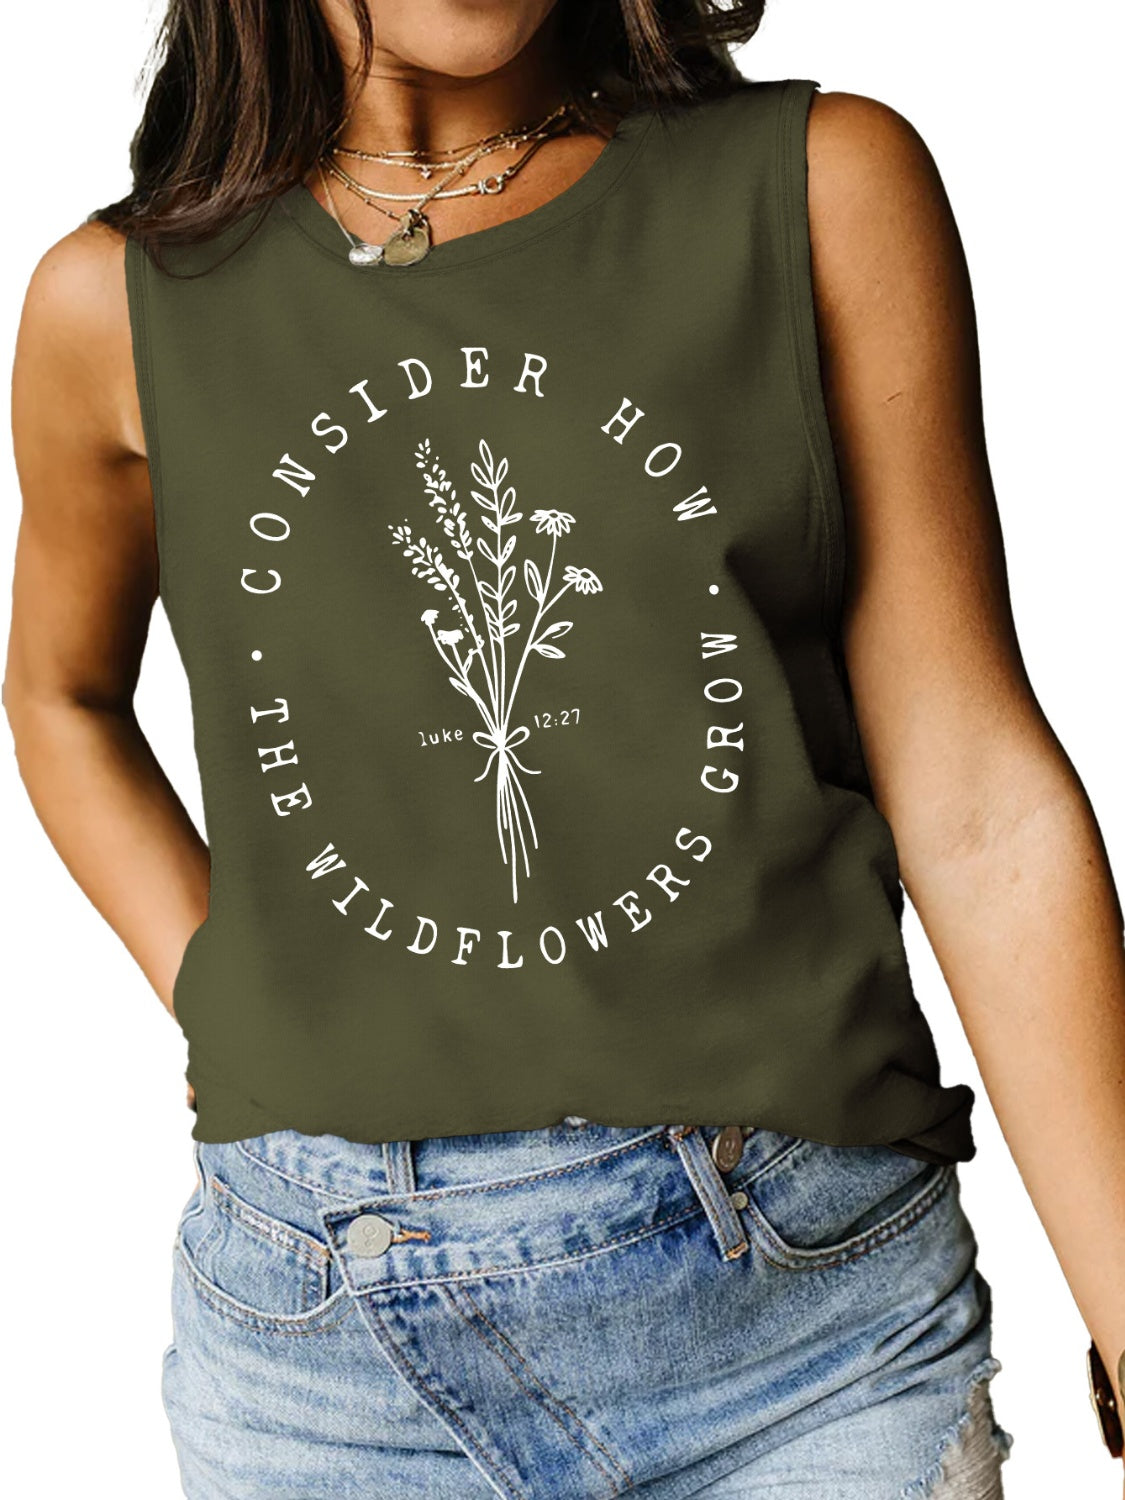 Consider the Wildflowers Round Neck Tank